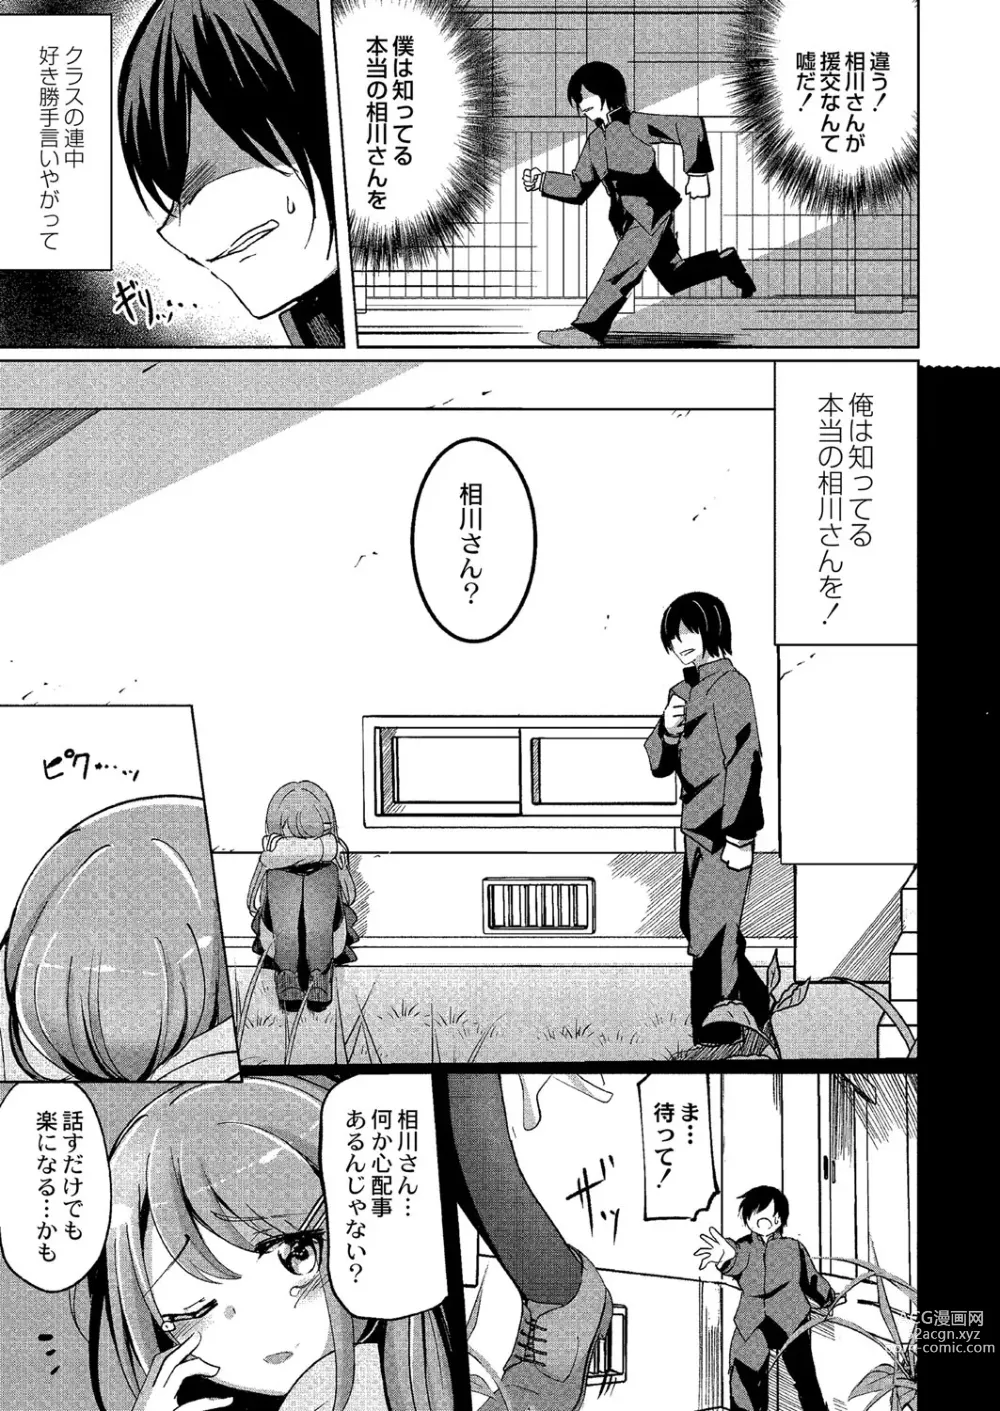 Page 6 of manga Wakarasare